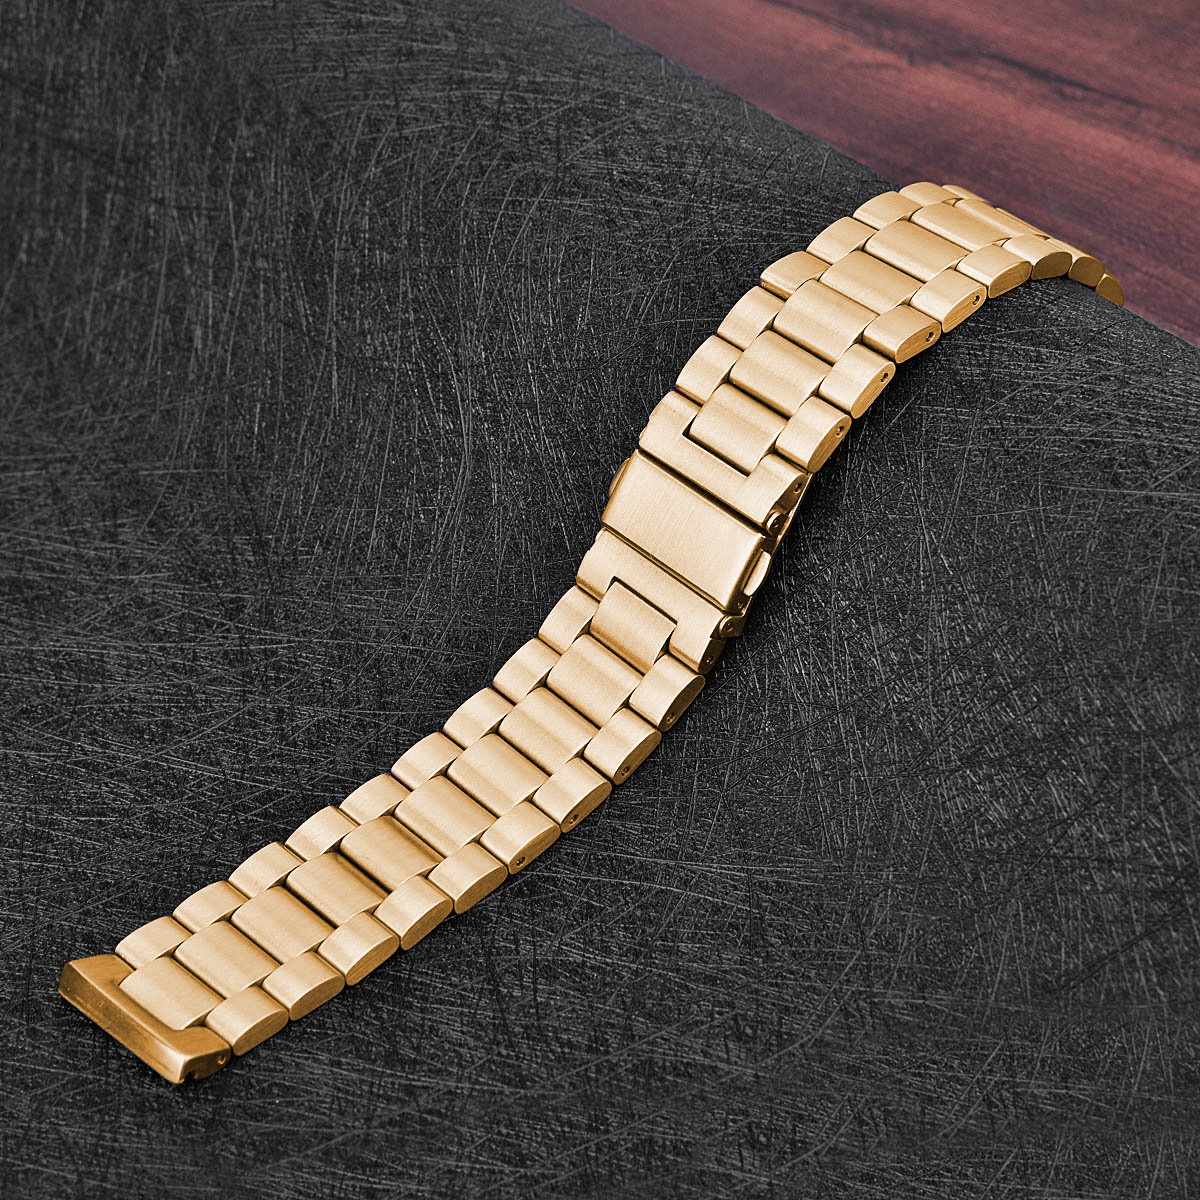 Fitbit Versa kralen stalen schakel band - rose goud